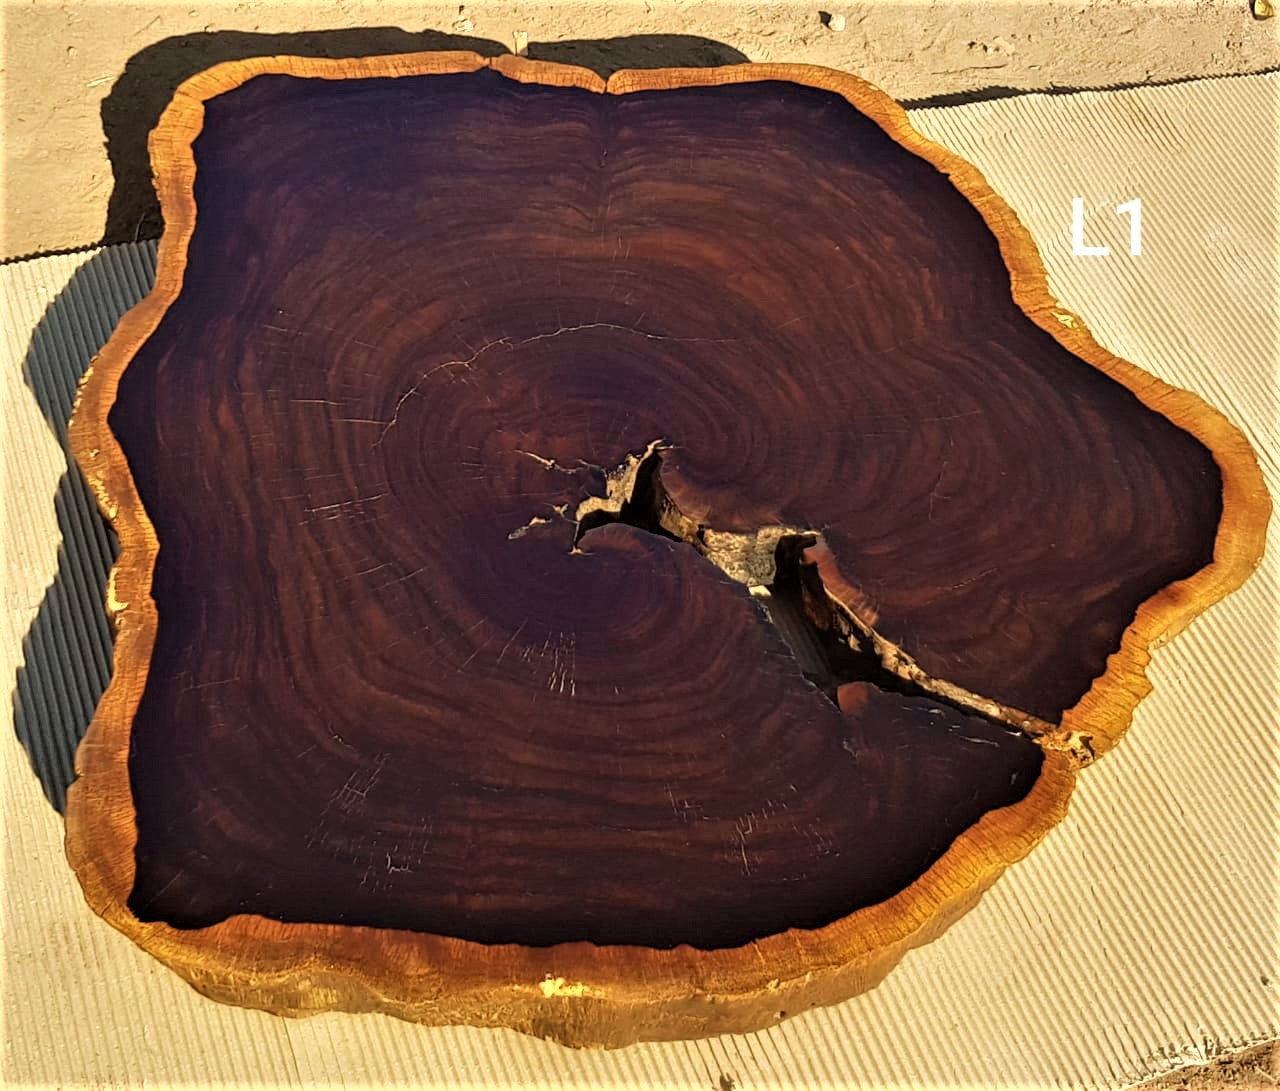 Leadwood Slice (37'80" x 34.25" x 3.54")